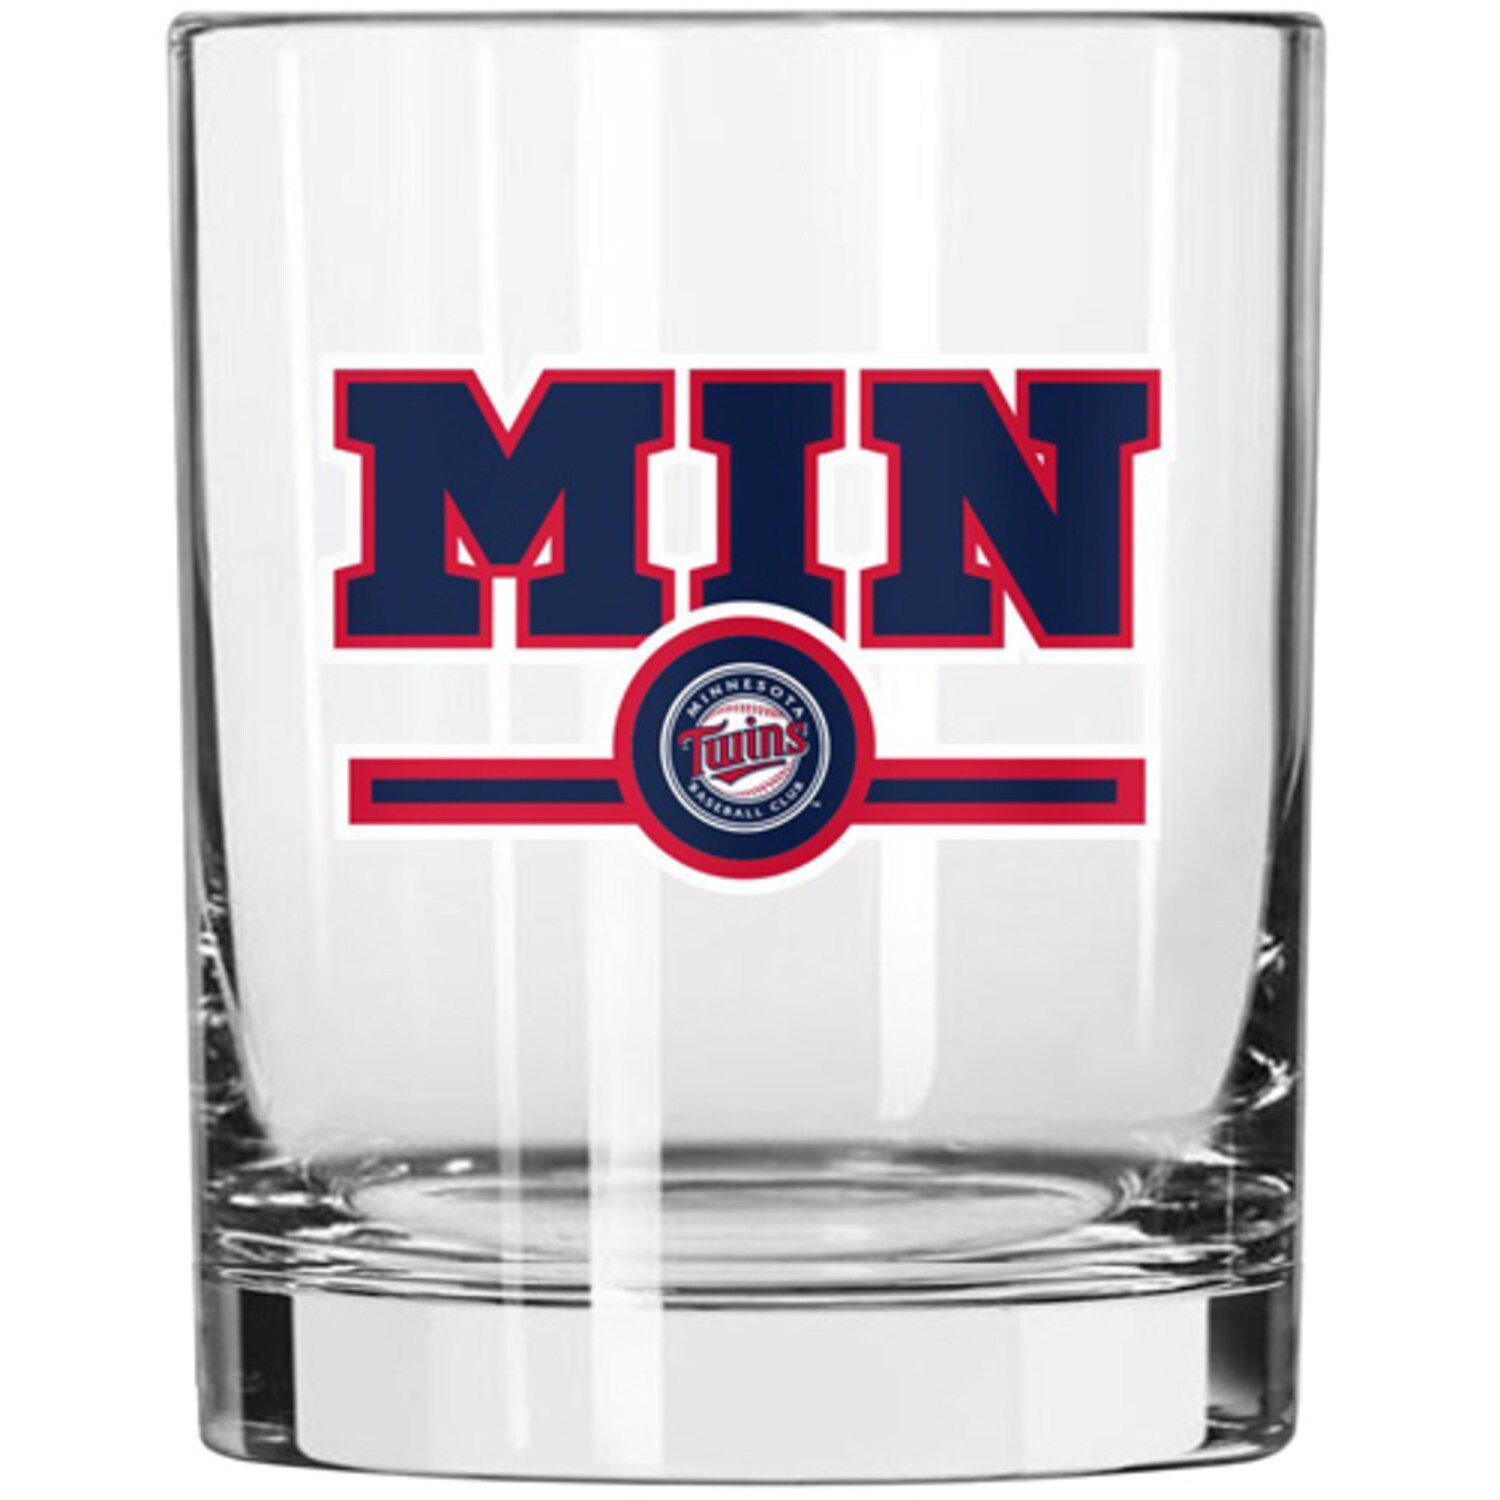 Image for Unbranded Minnesota Twins Letterman 14oz. Rocks Glass at Kohl's.